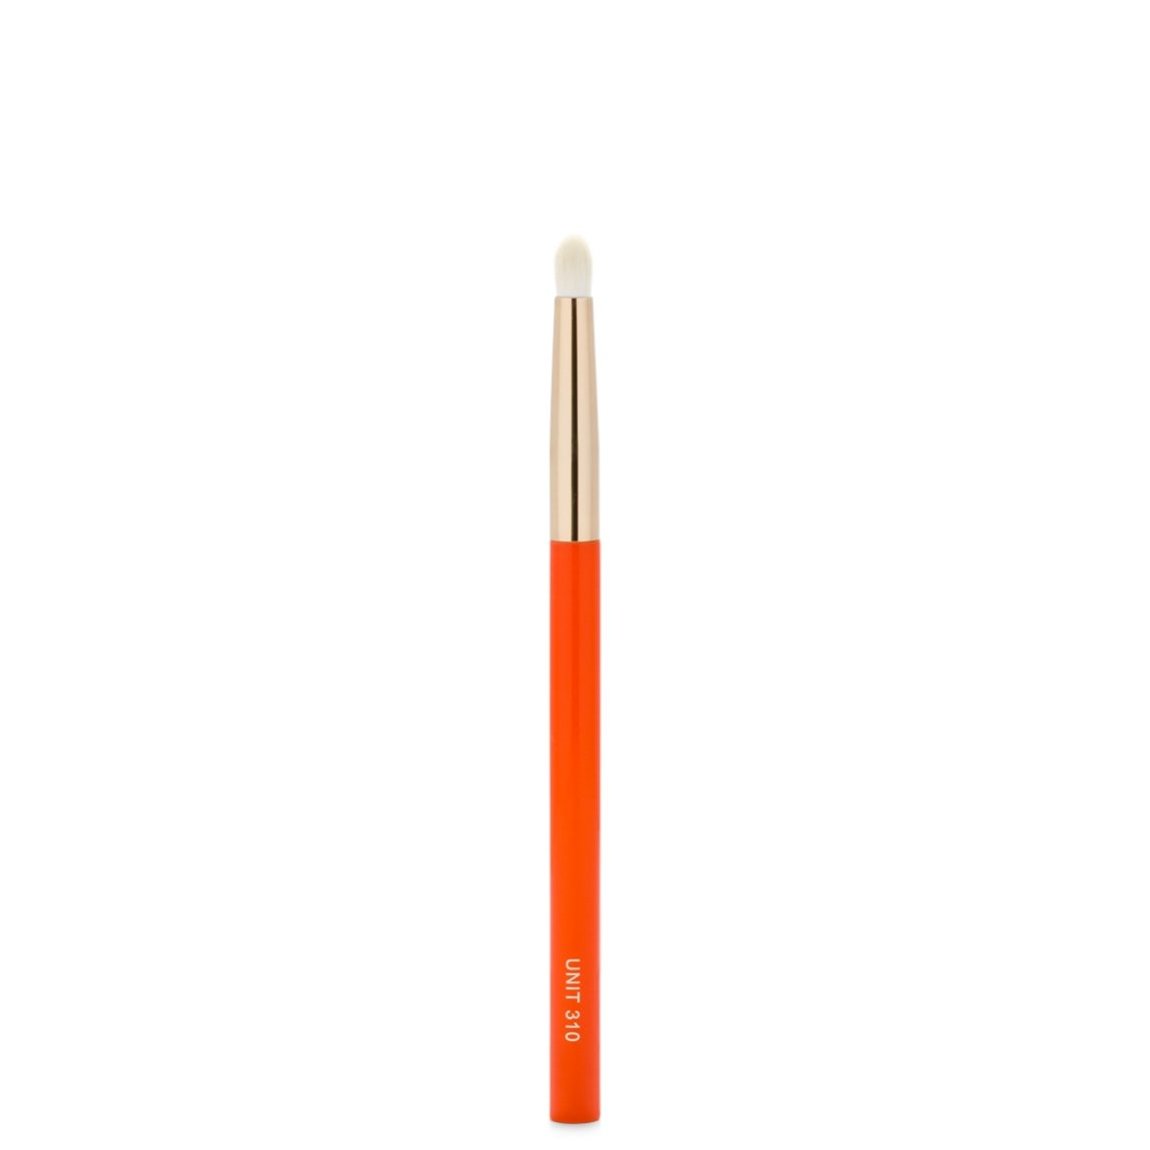 UNITS Orange Series UNIT 310 Pencil Brush alternative view 1 - product swatch.